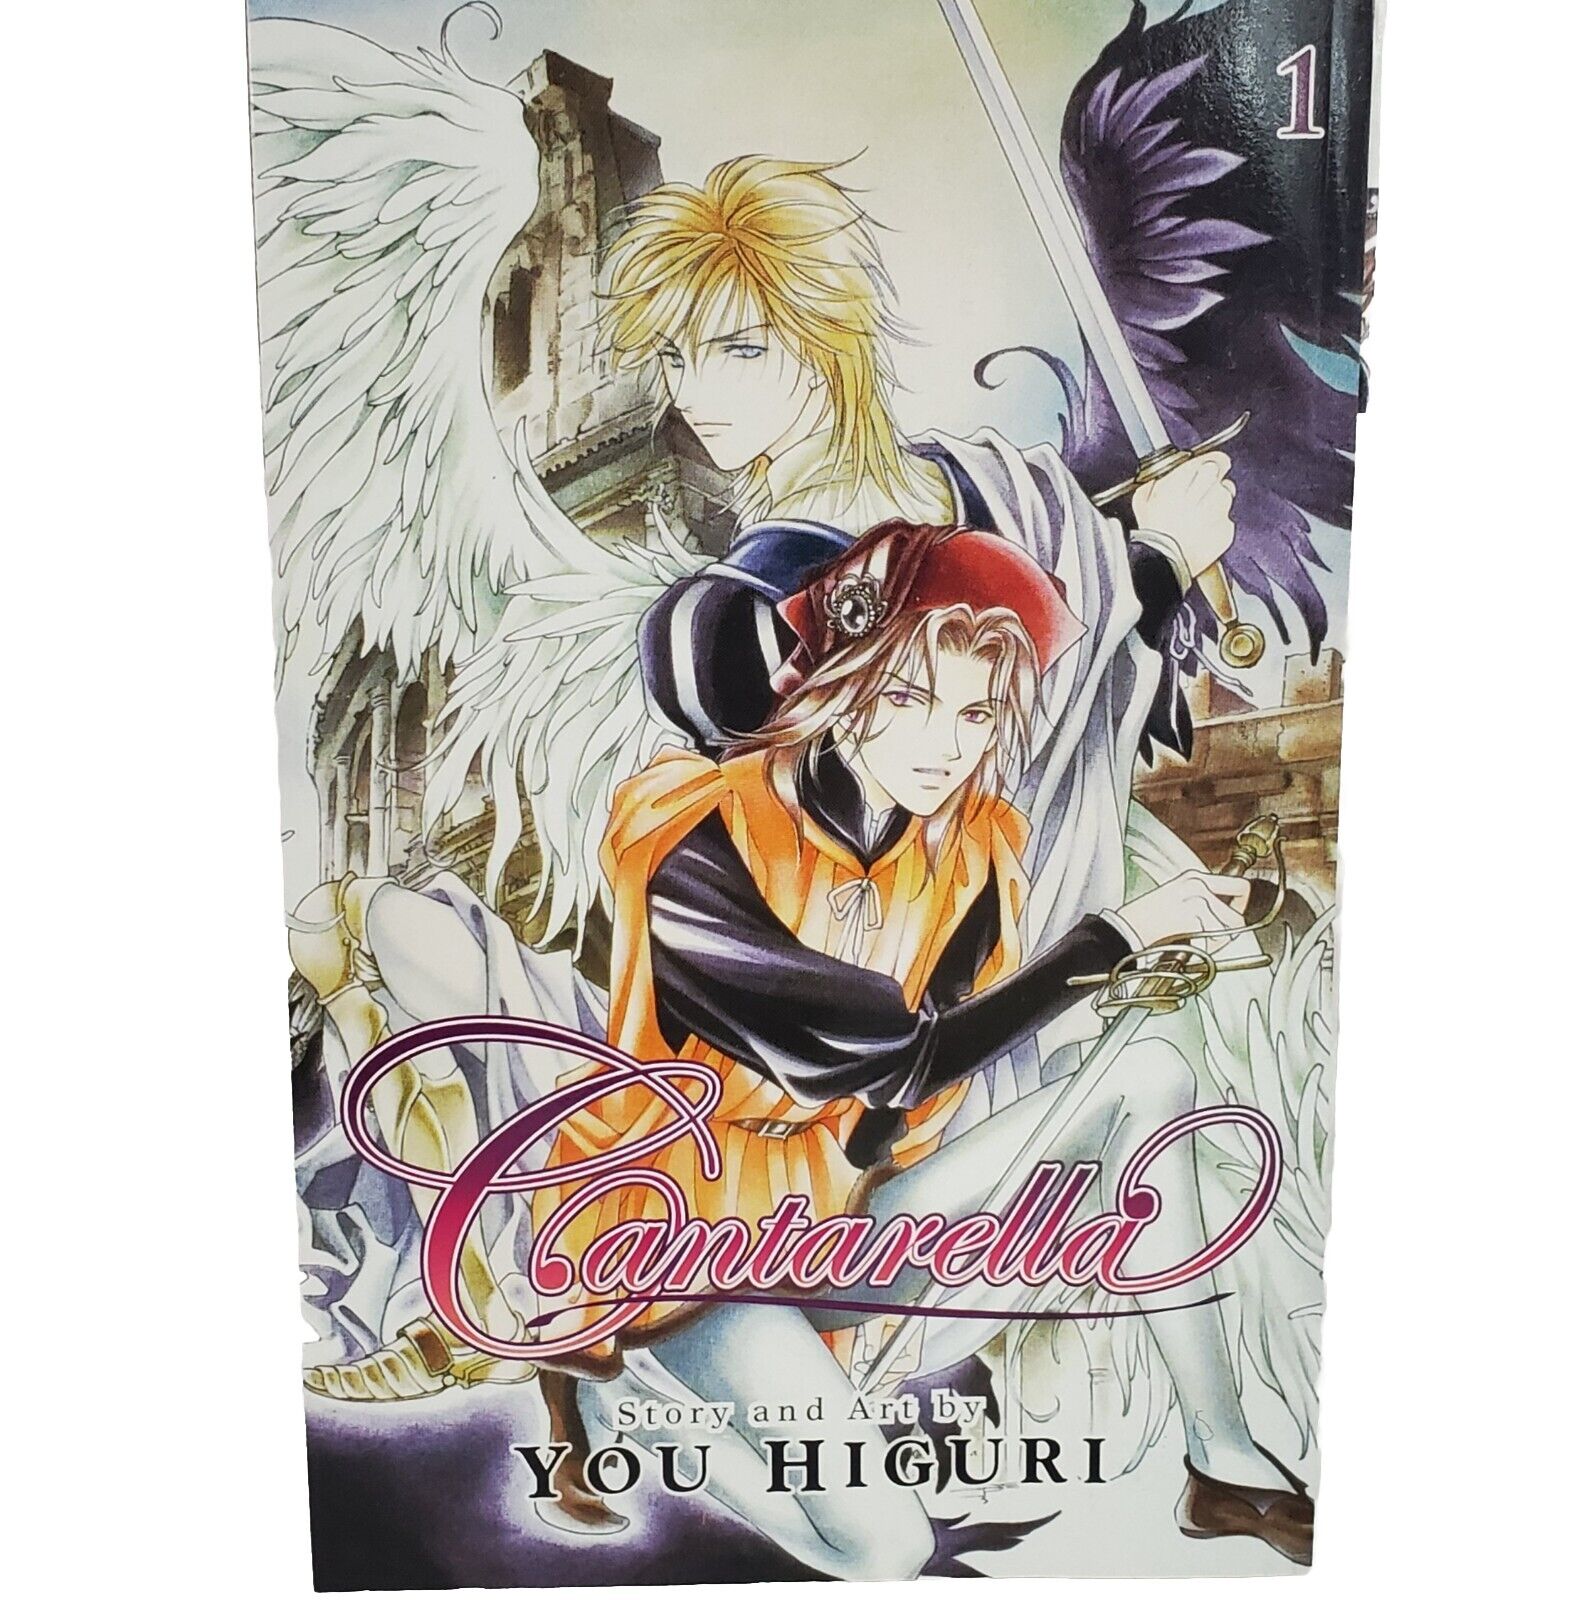 Mature Manga CANTARELLA Vol. 1 by You Higuri English Paperback GoComi 2005